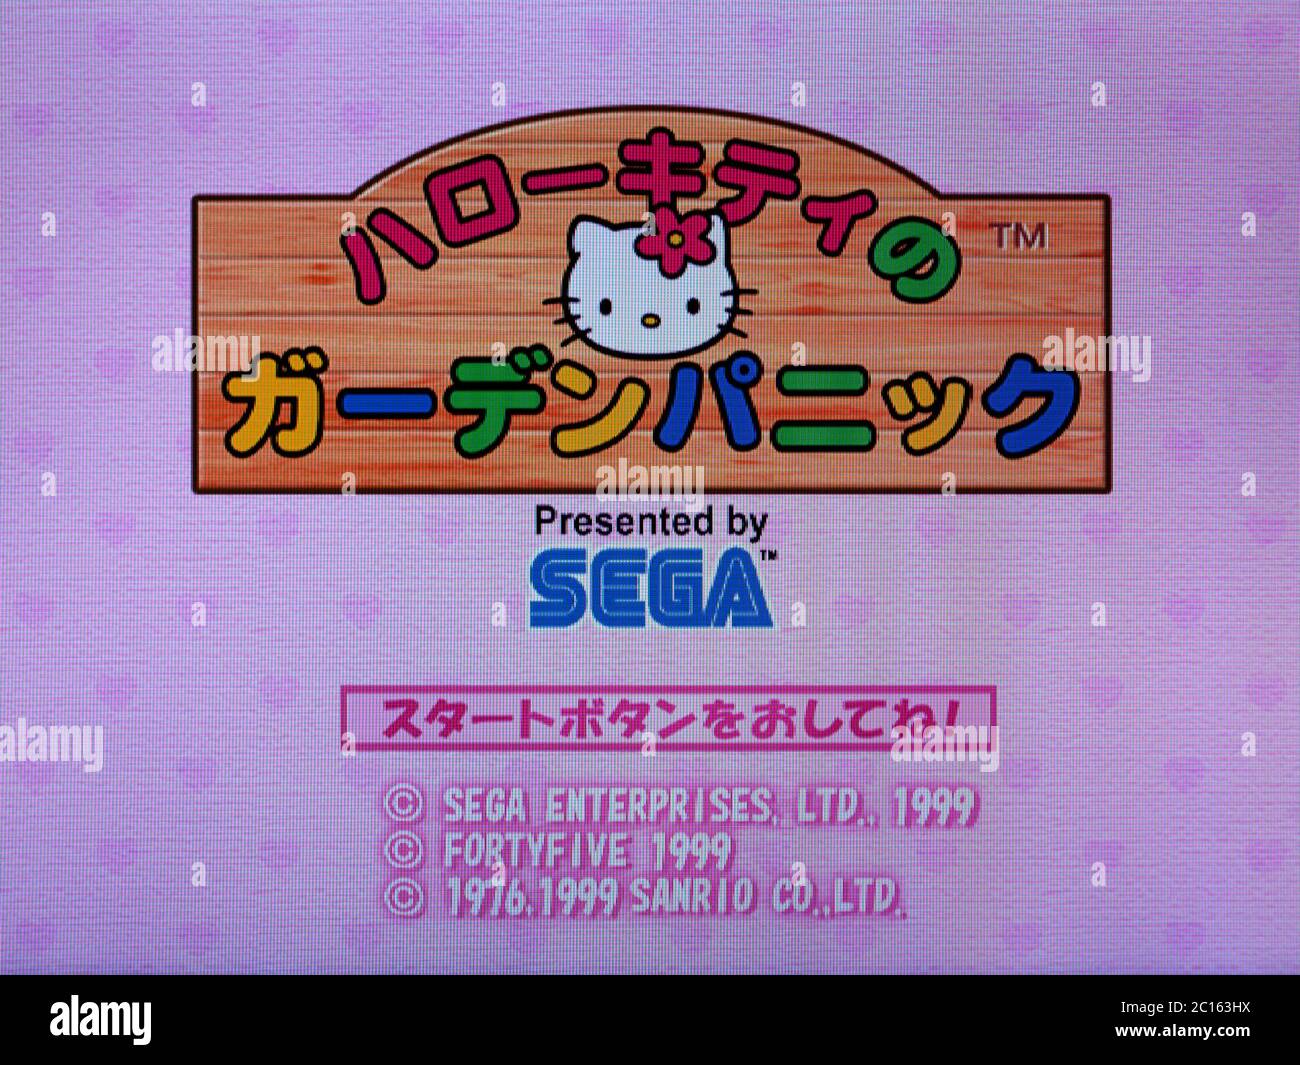 Hello Kitty Garden Panic - Sega Dreamcast Videogame - Editorial use only Stock Photo